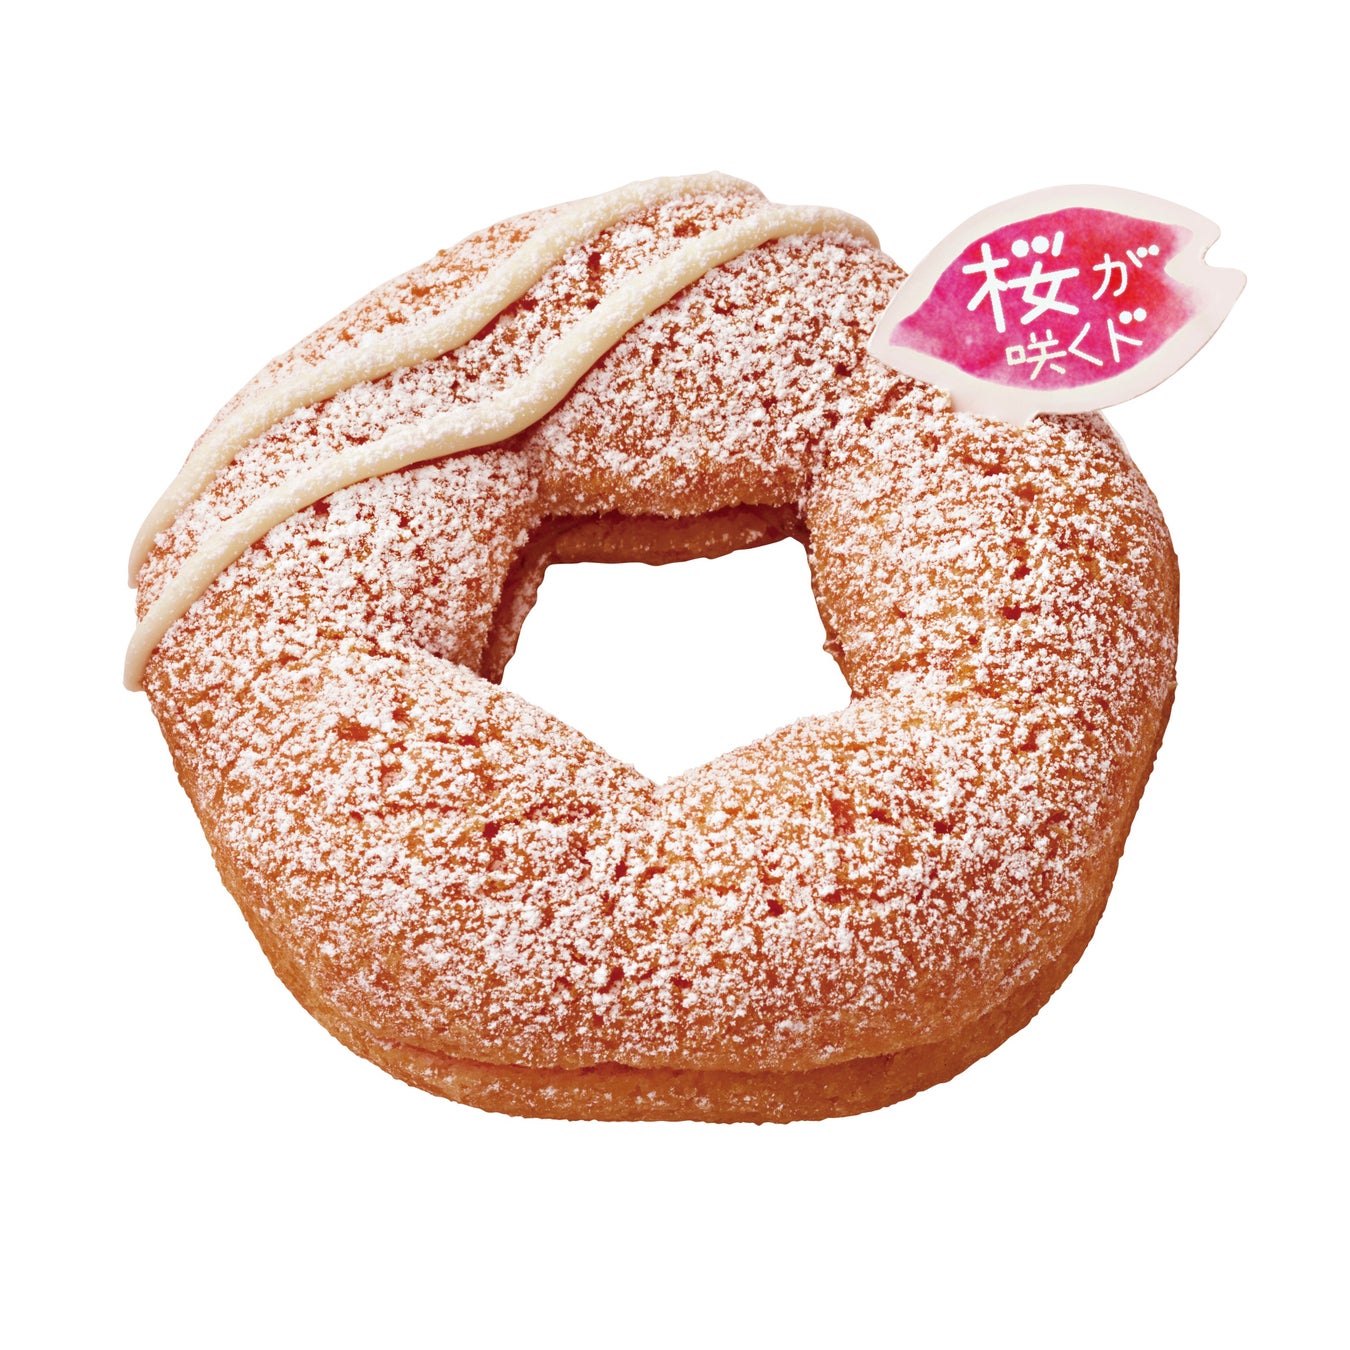 Mister Donut celebrates sakura season 2022 with “Sakudo” blooming 